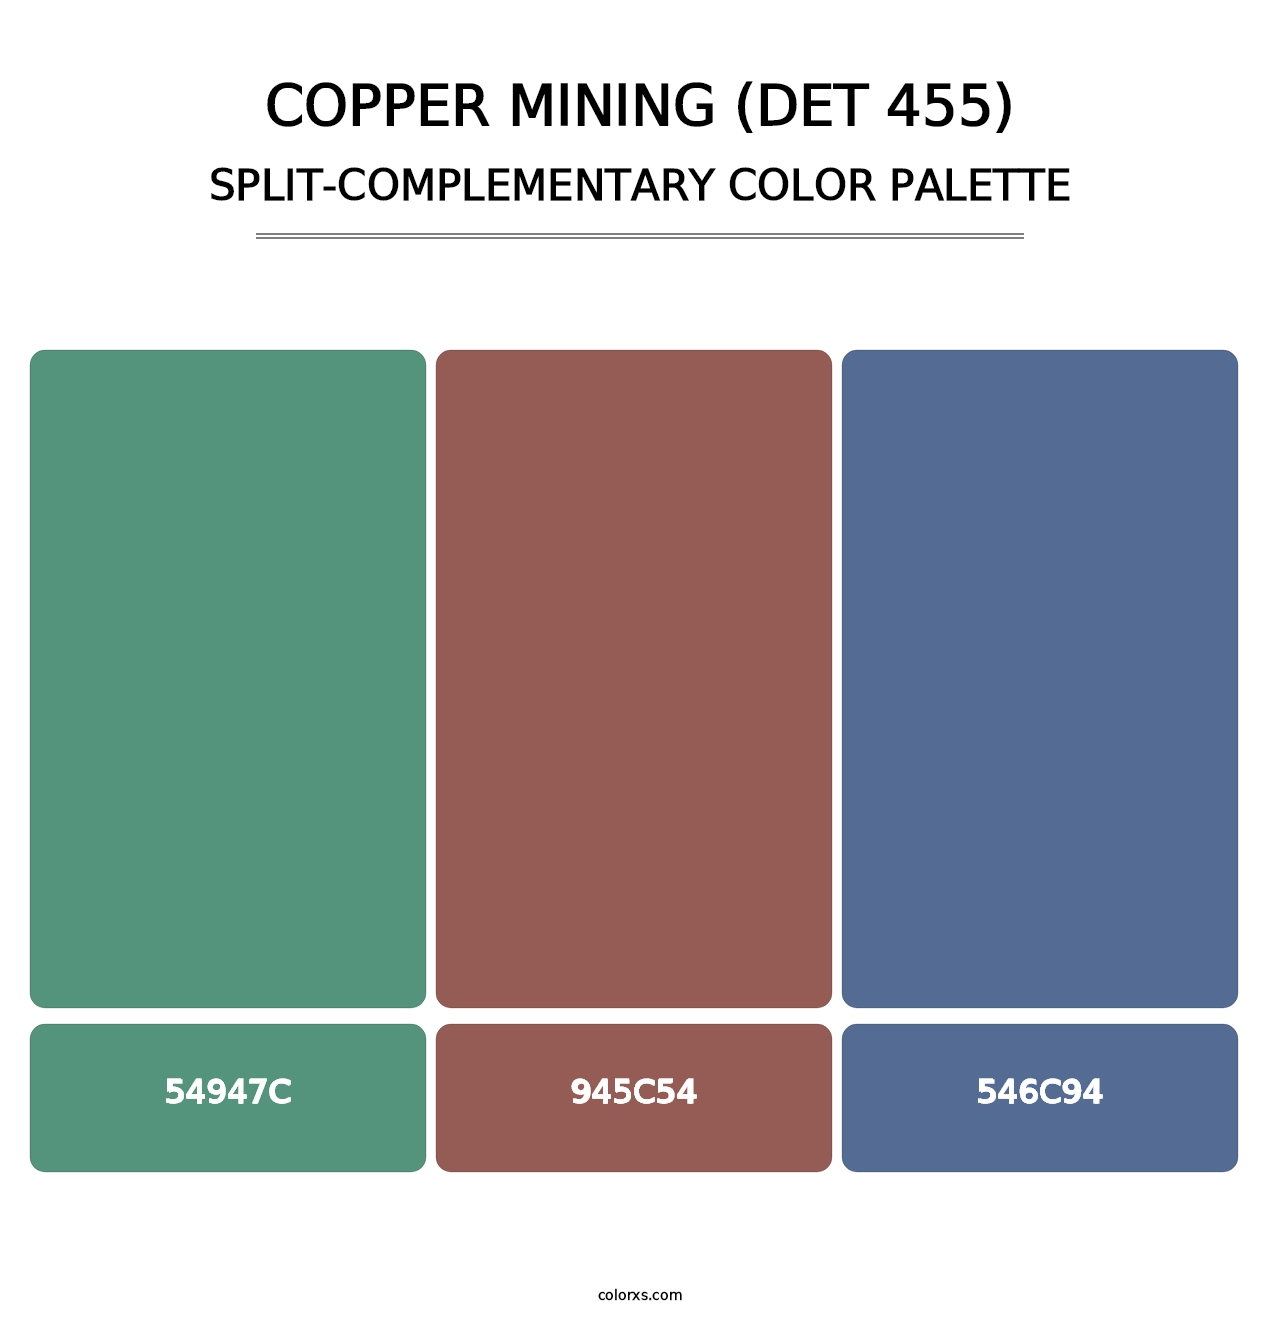 Copper Mining (DET 455) - Split-Complementary Color Palette